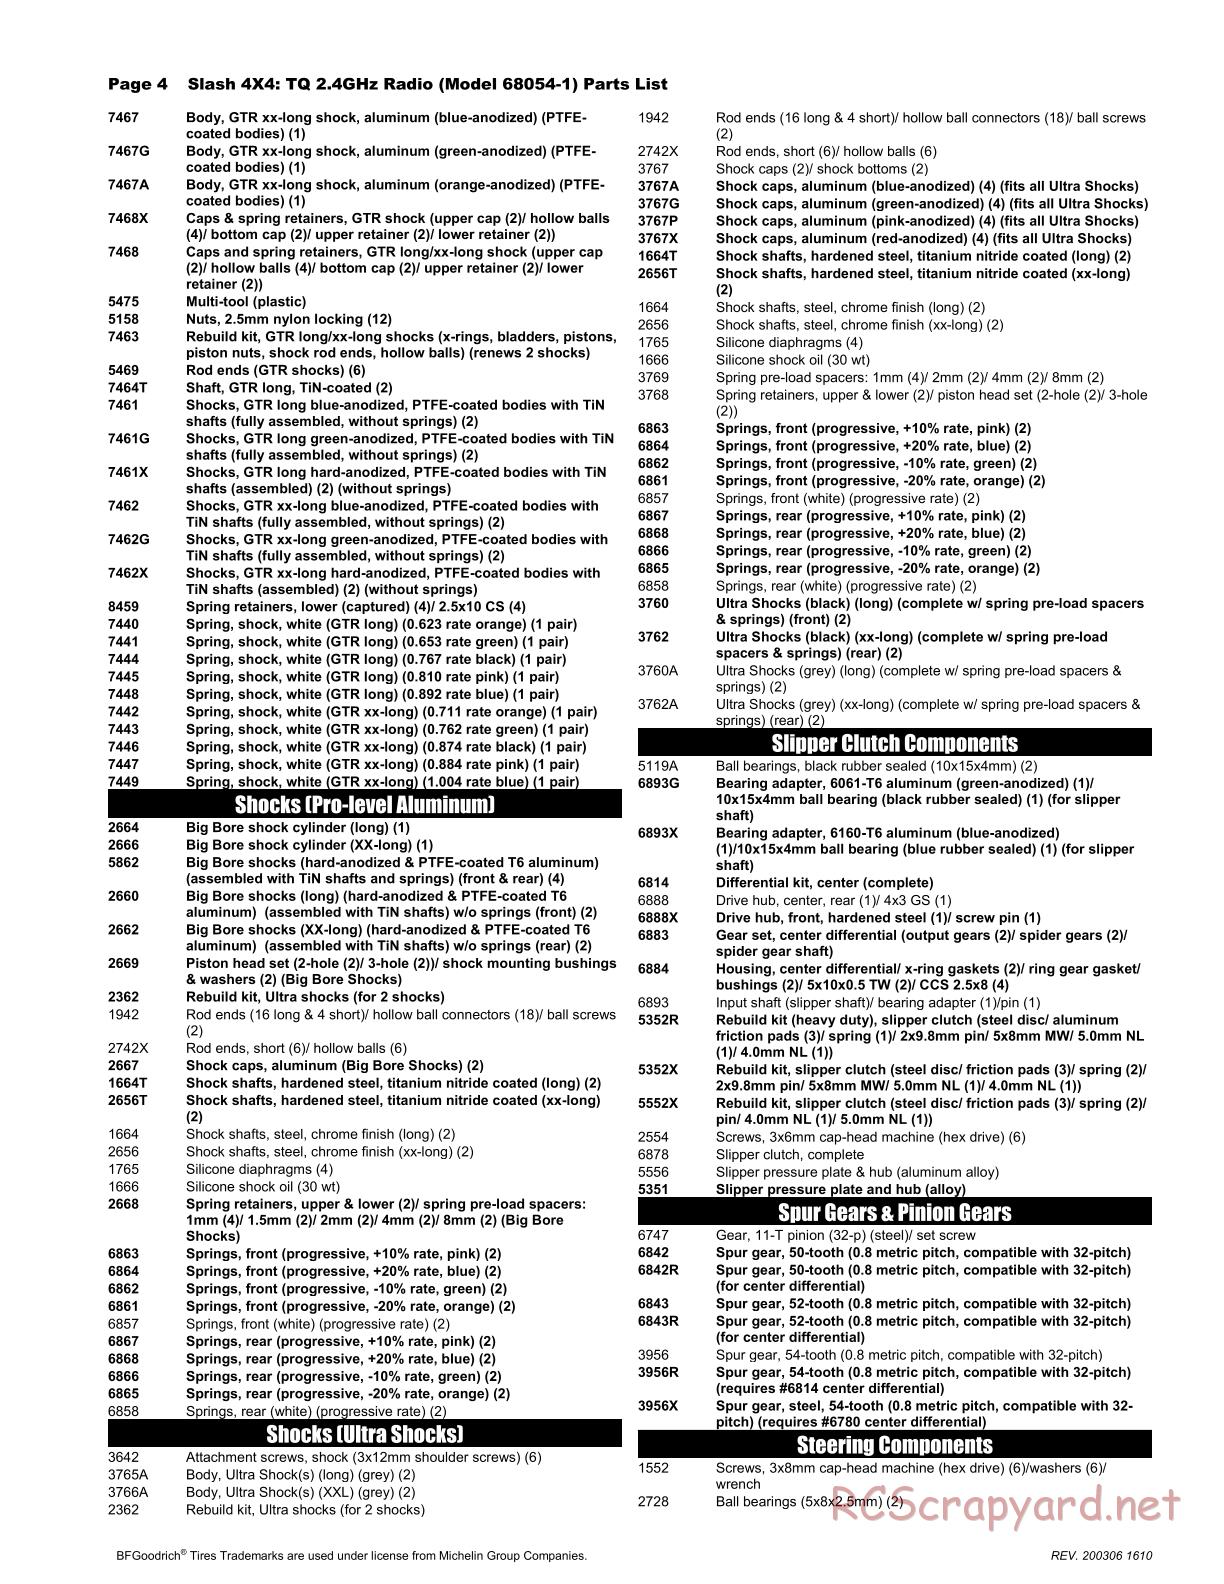 Traxxas - Slash 4x4 Brushed - Parts List - Page 4